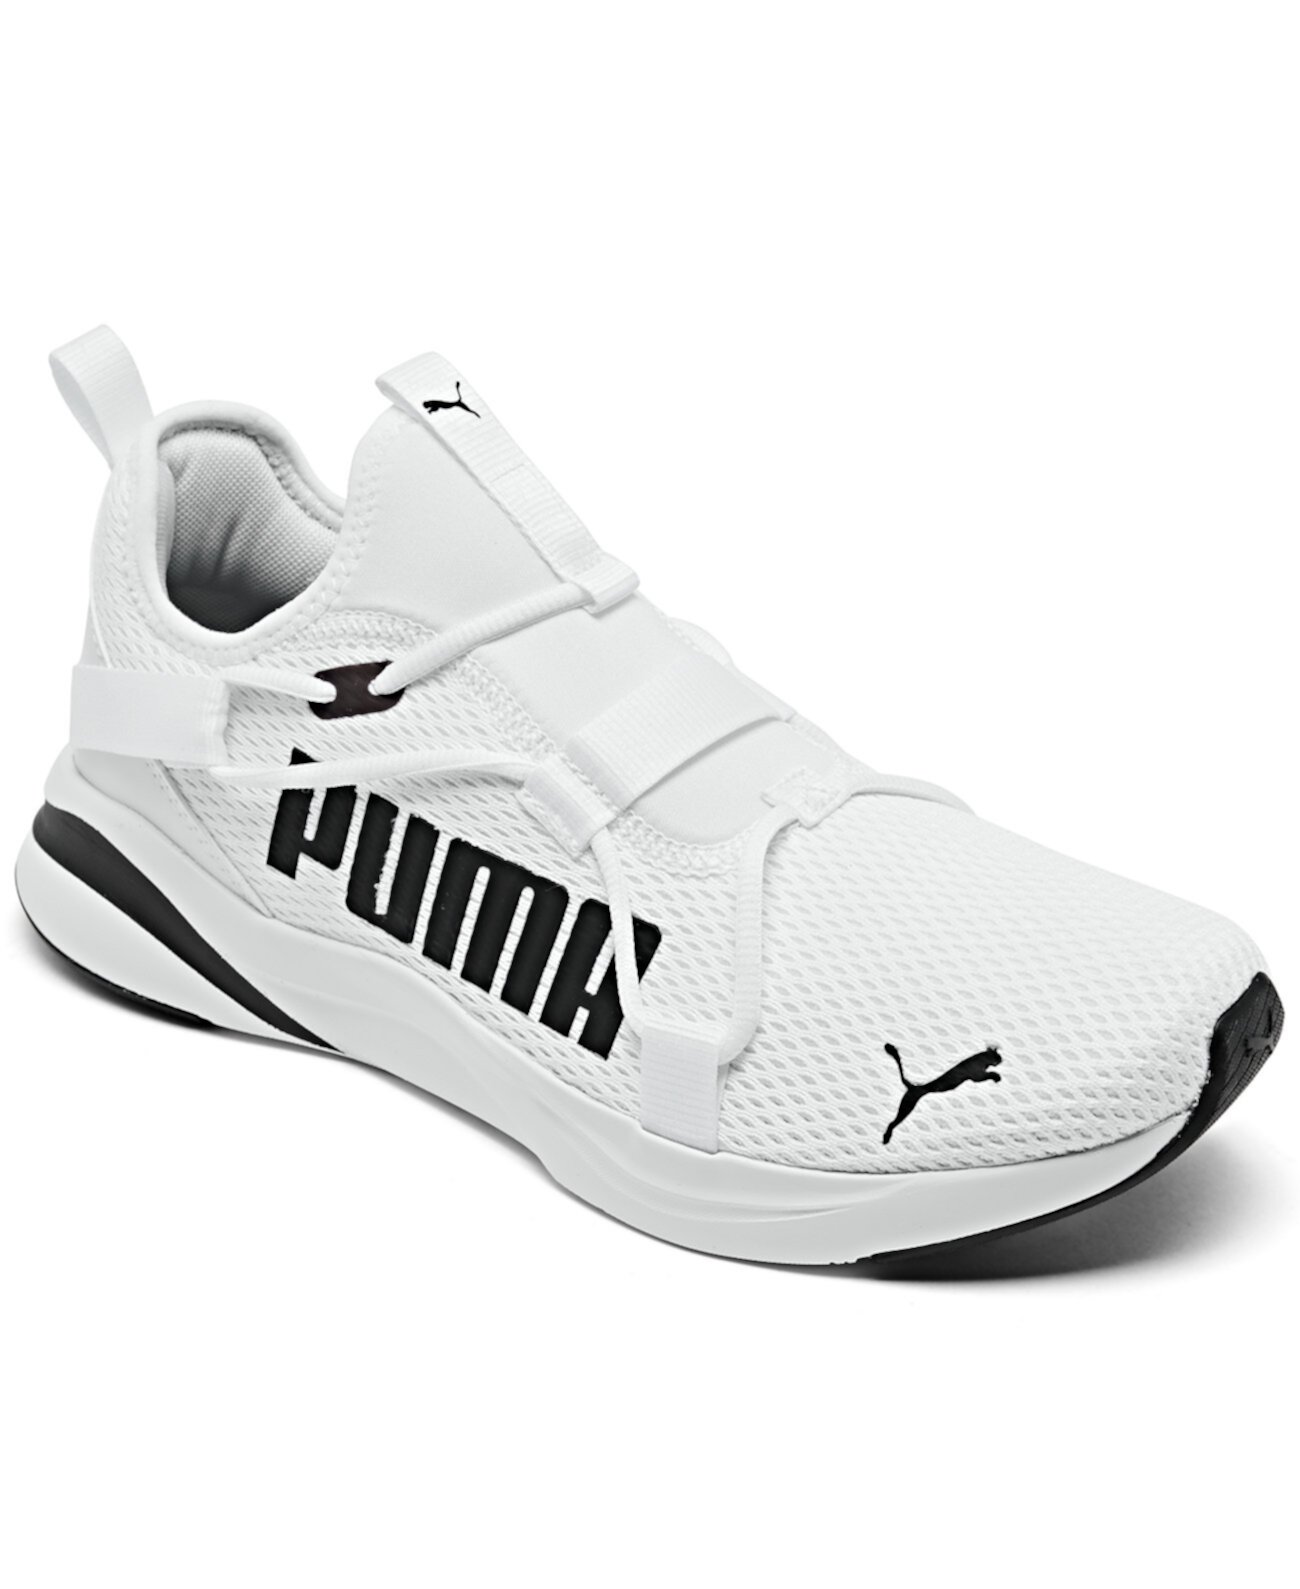 Мужские беговые кроссовки Softride Rift от Finish Line PUMA